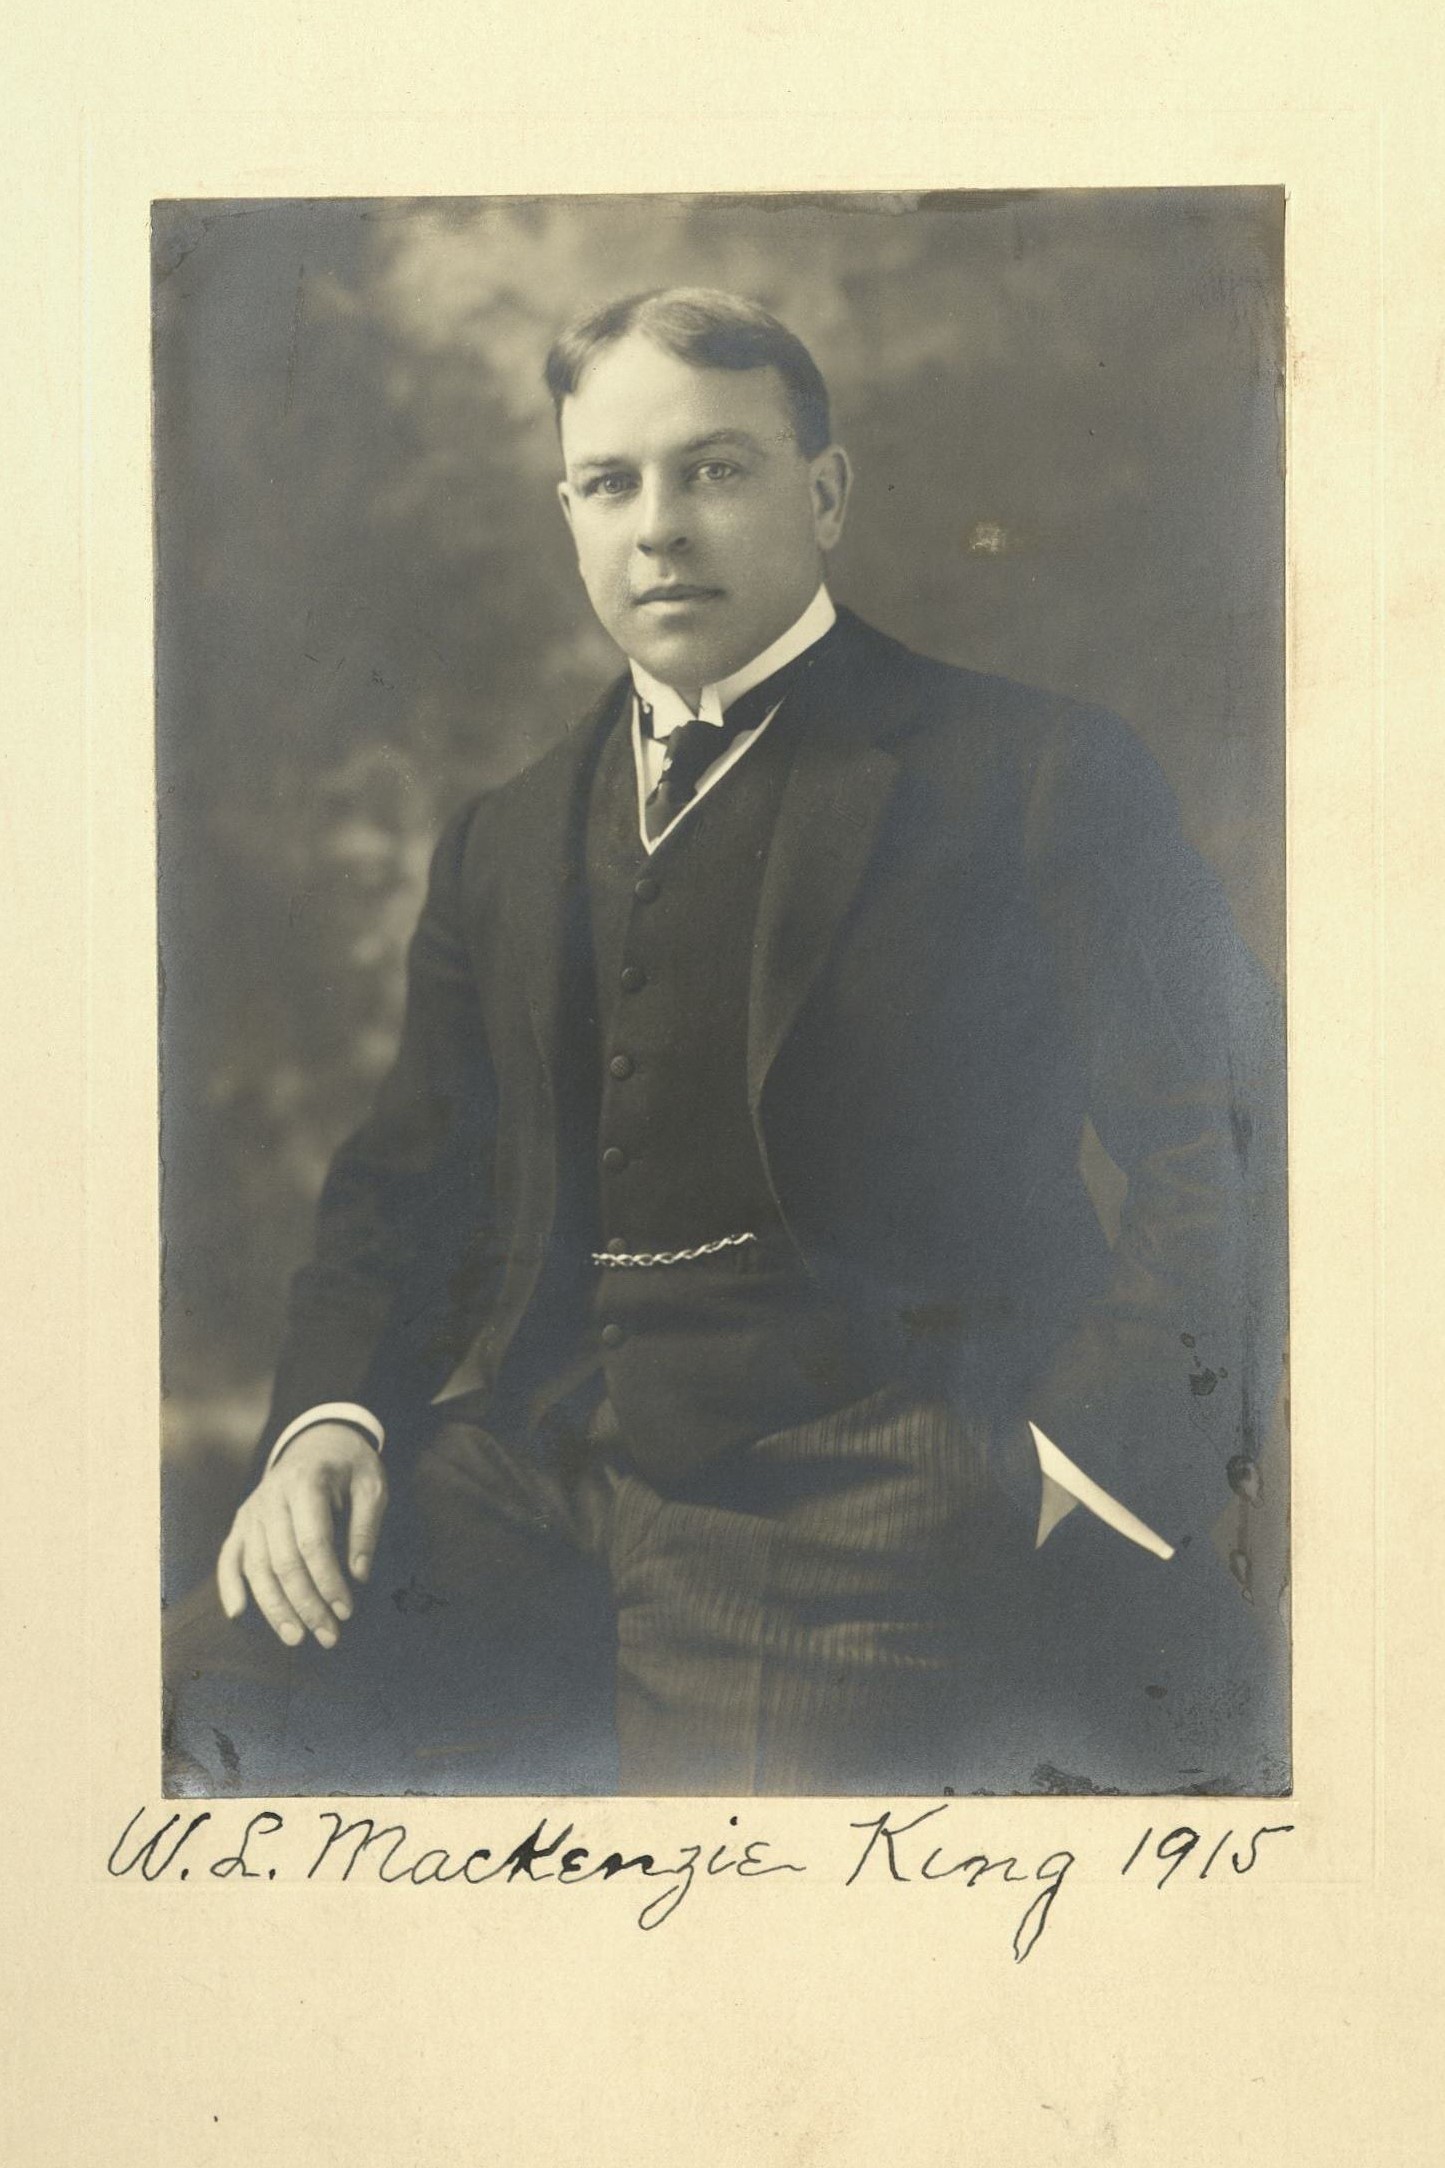 Member portrait of W. L. Mackenzie King